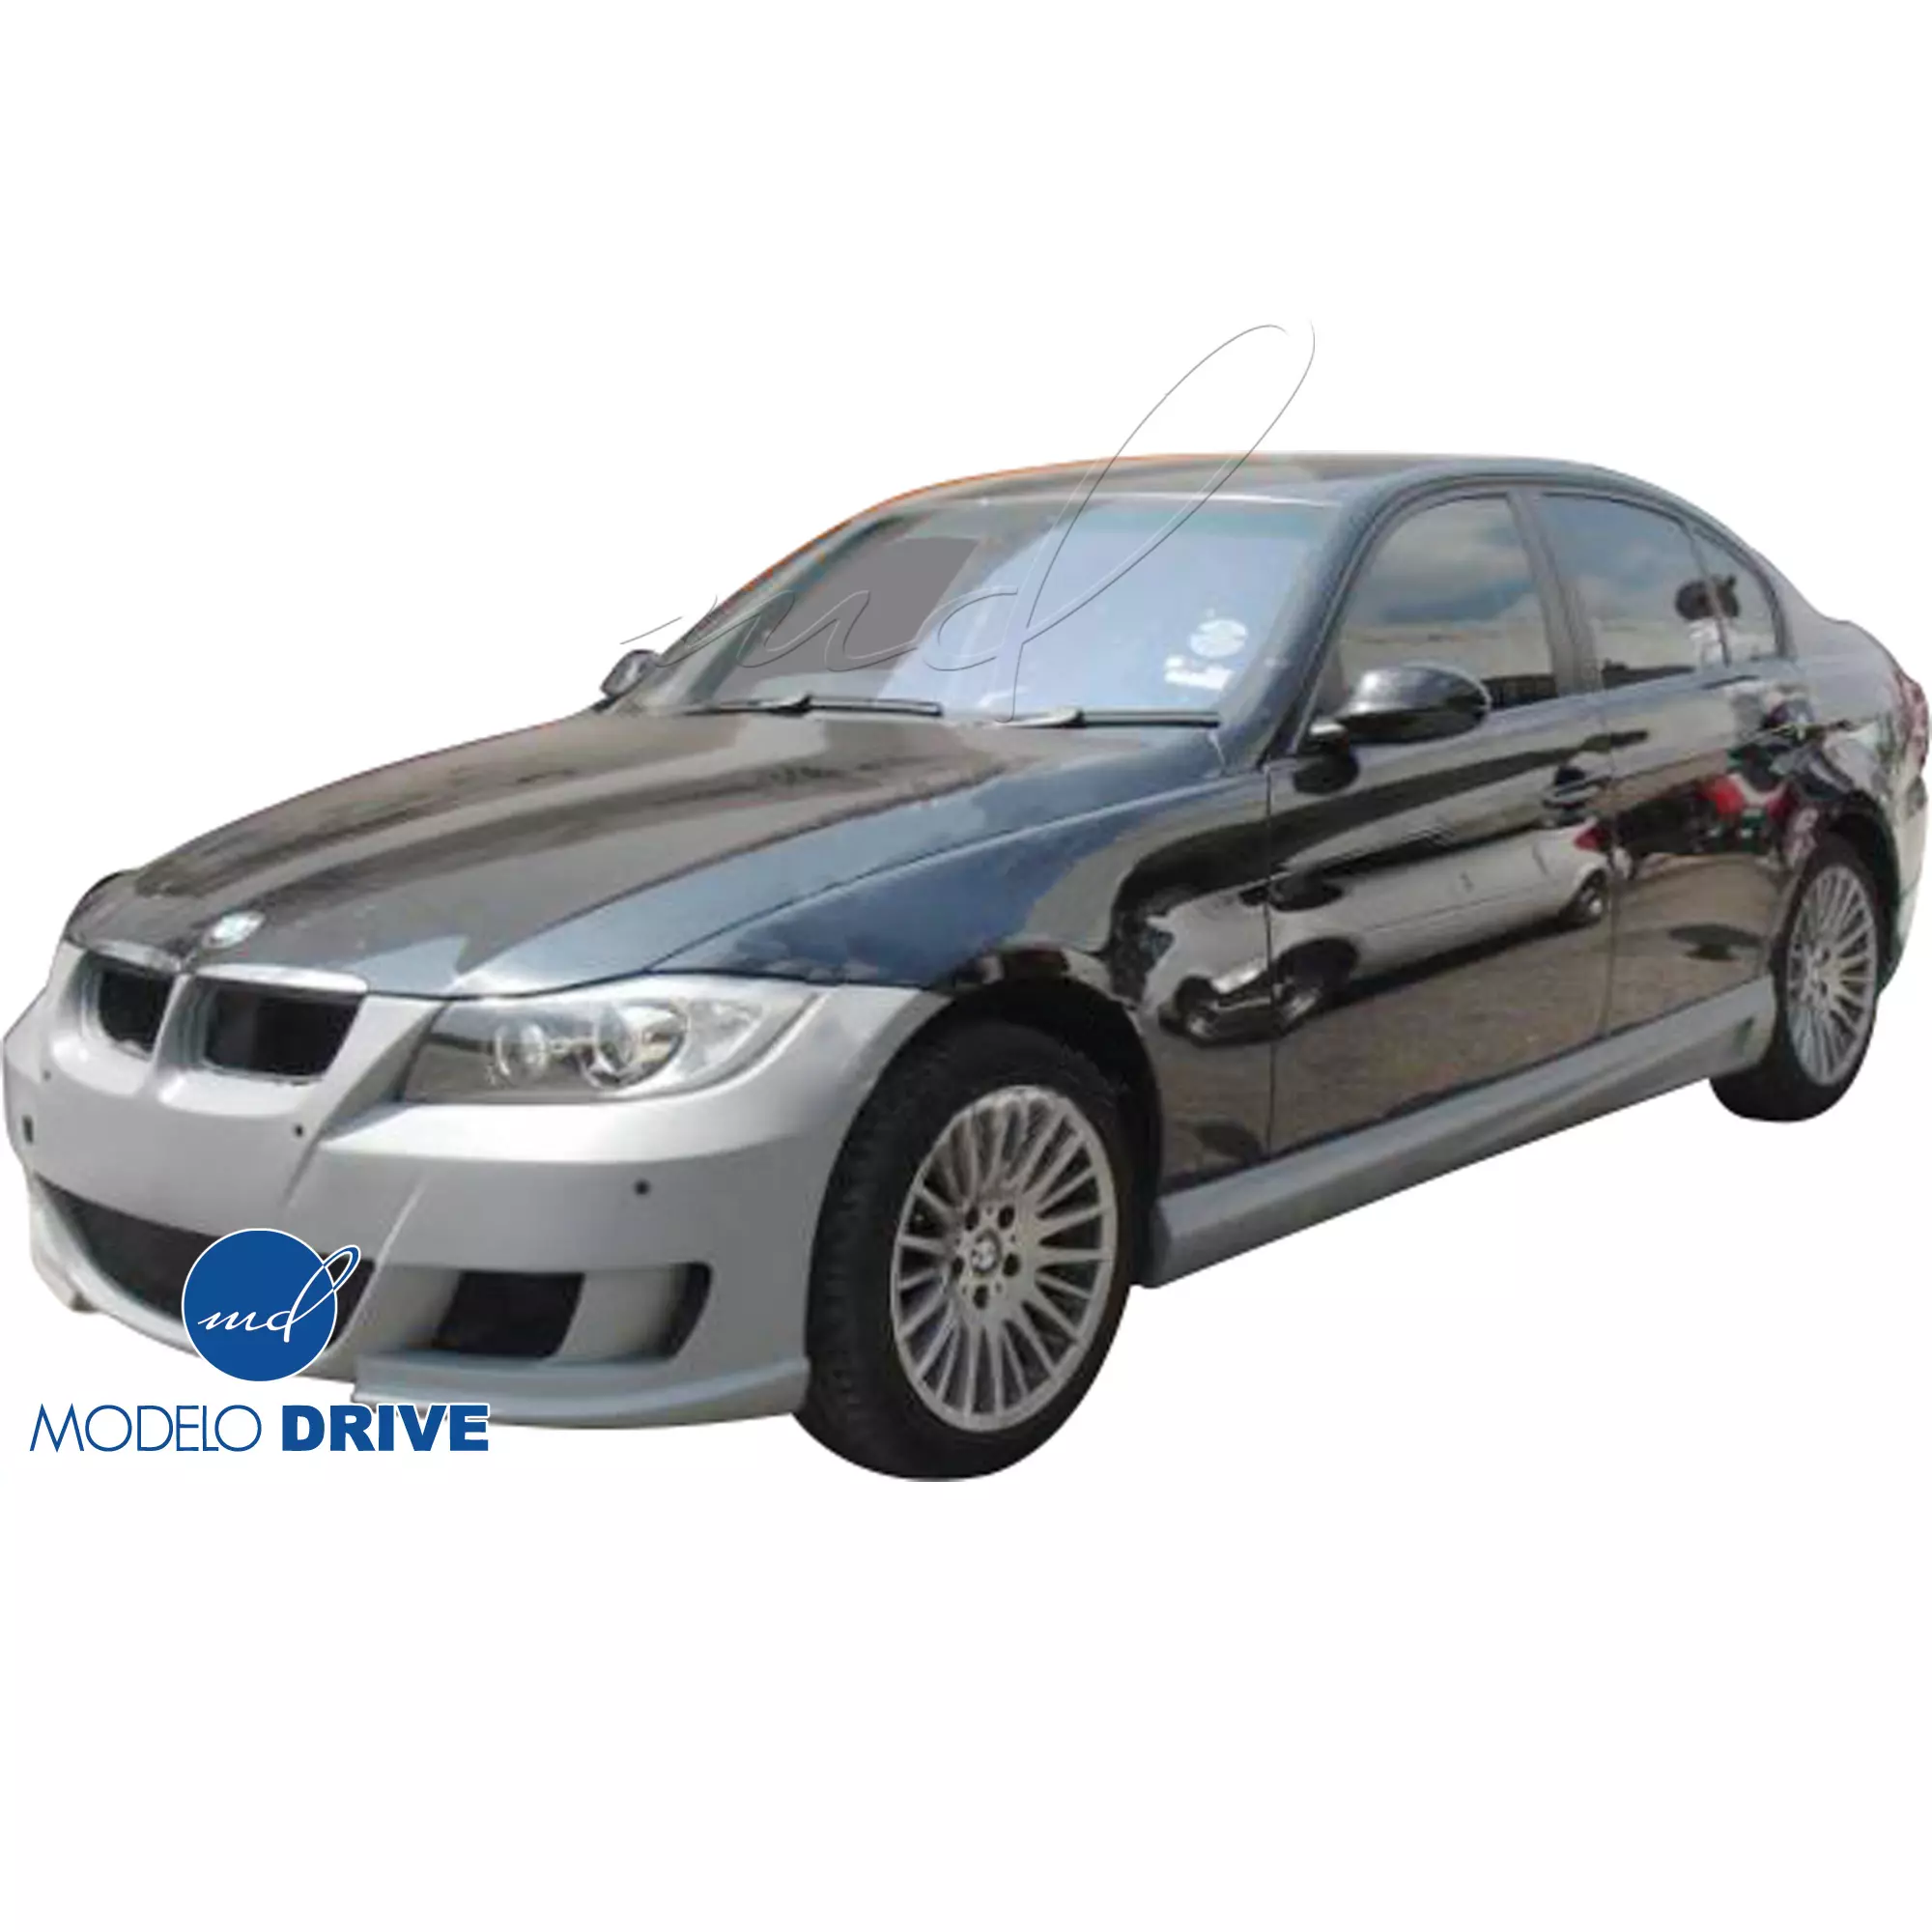 ModeloDrive FRP LUMM Body Kit 4pc > BMW 3-Series E90 2007-2010> 4dr - Image 5